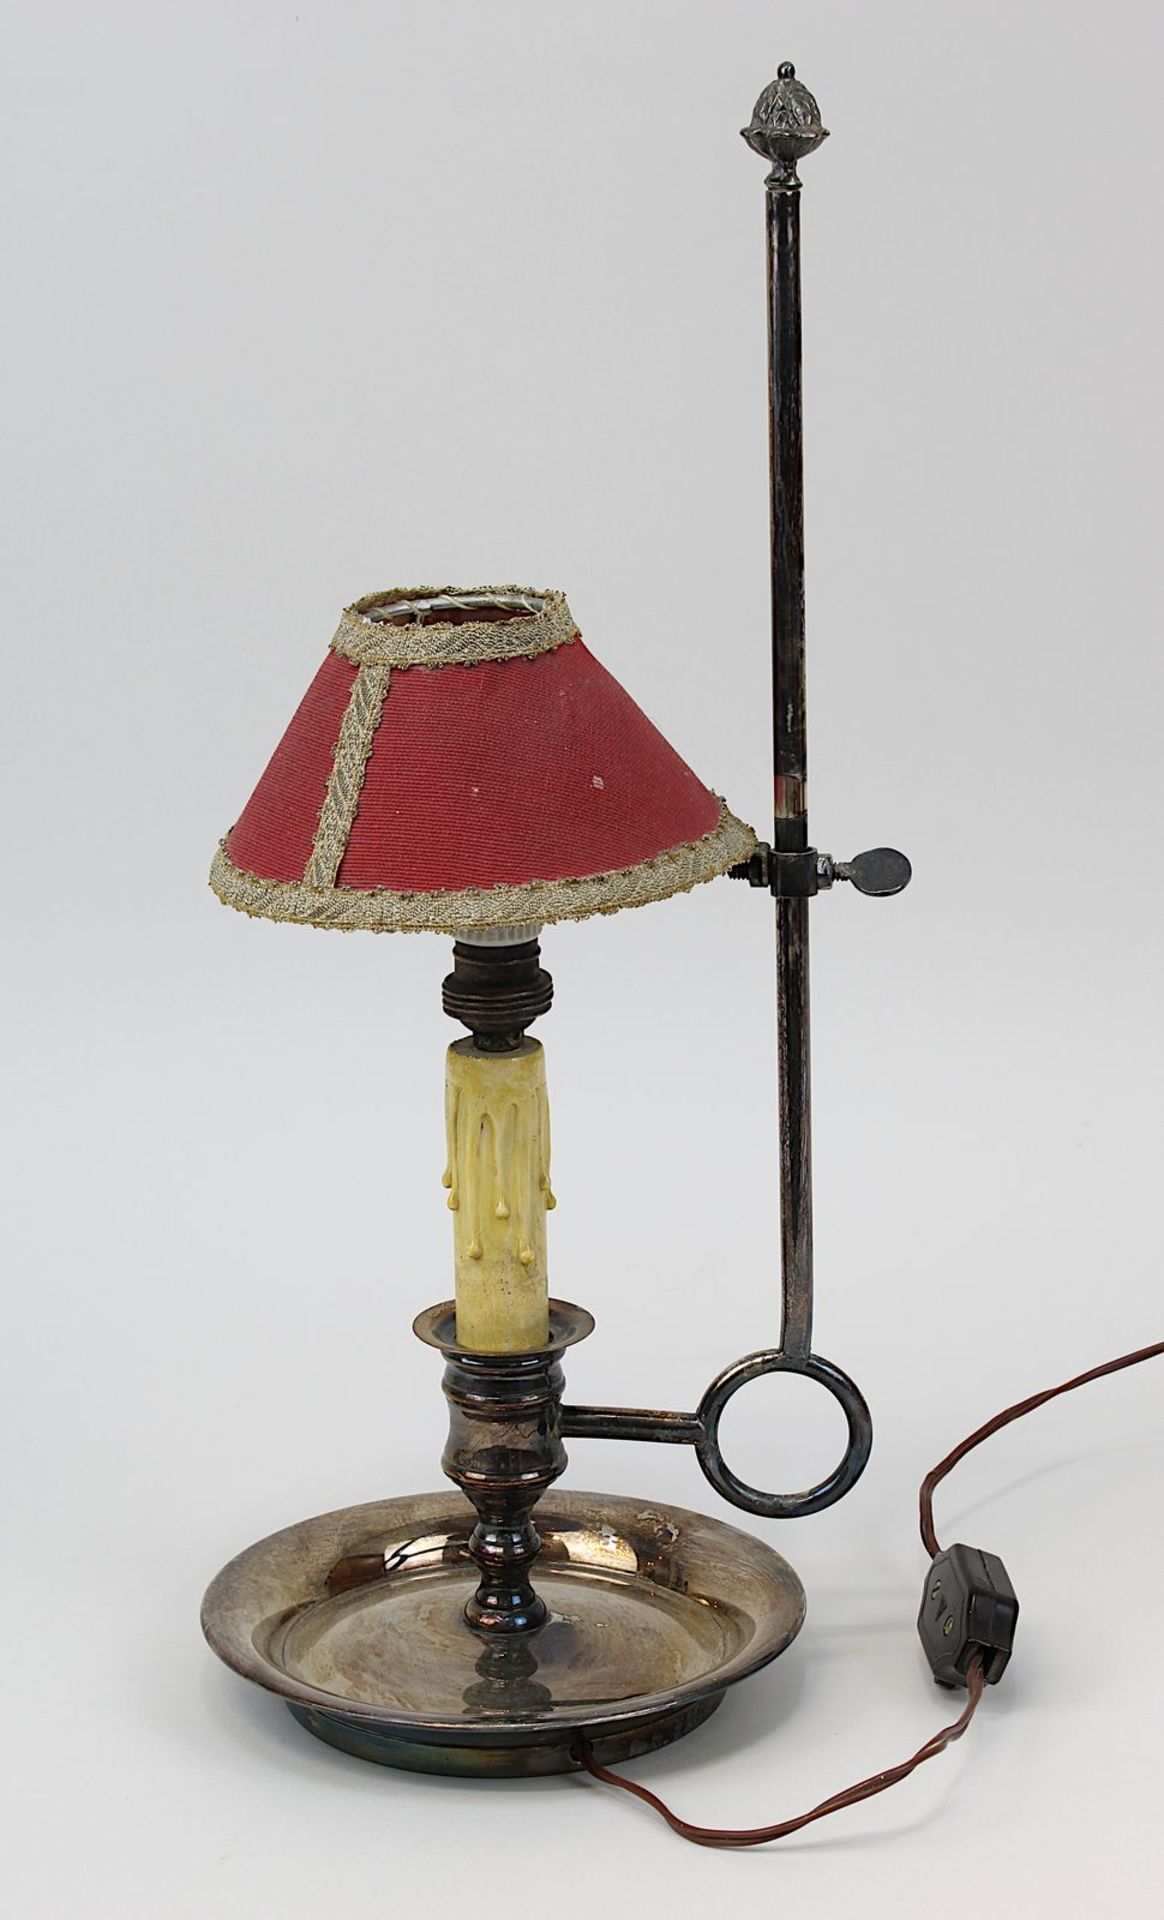 Bouillotte-Lampe, im Stil des 18. Jh, 2. H. 20. Jh., Metall versilbert, einkerzig, mit rotem